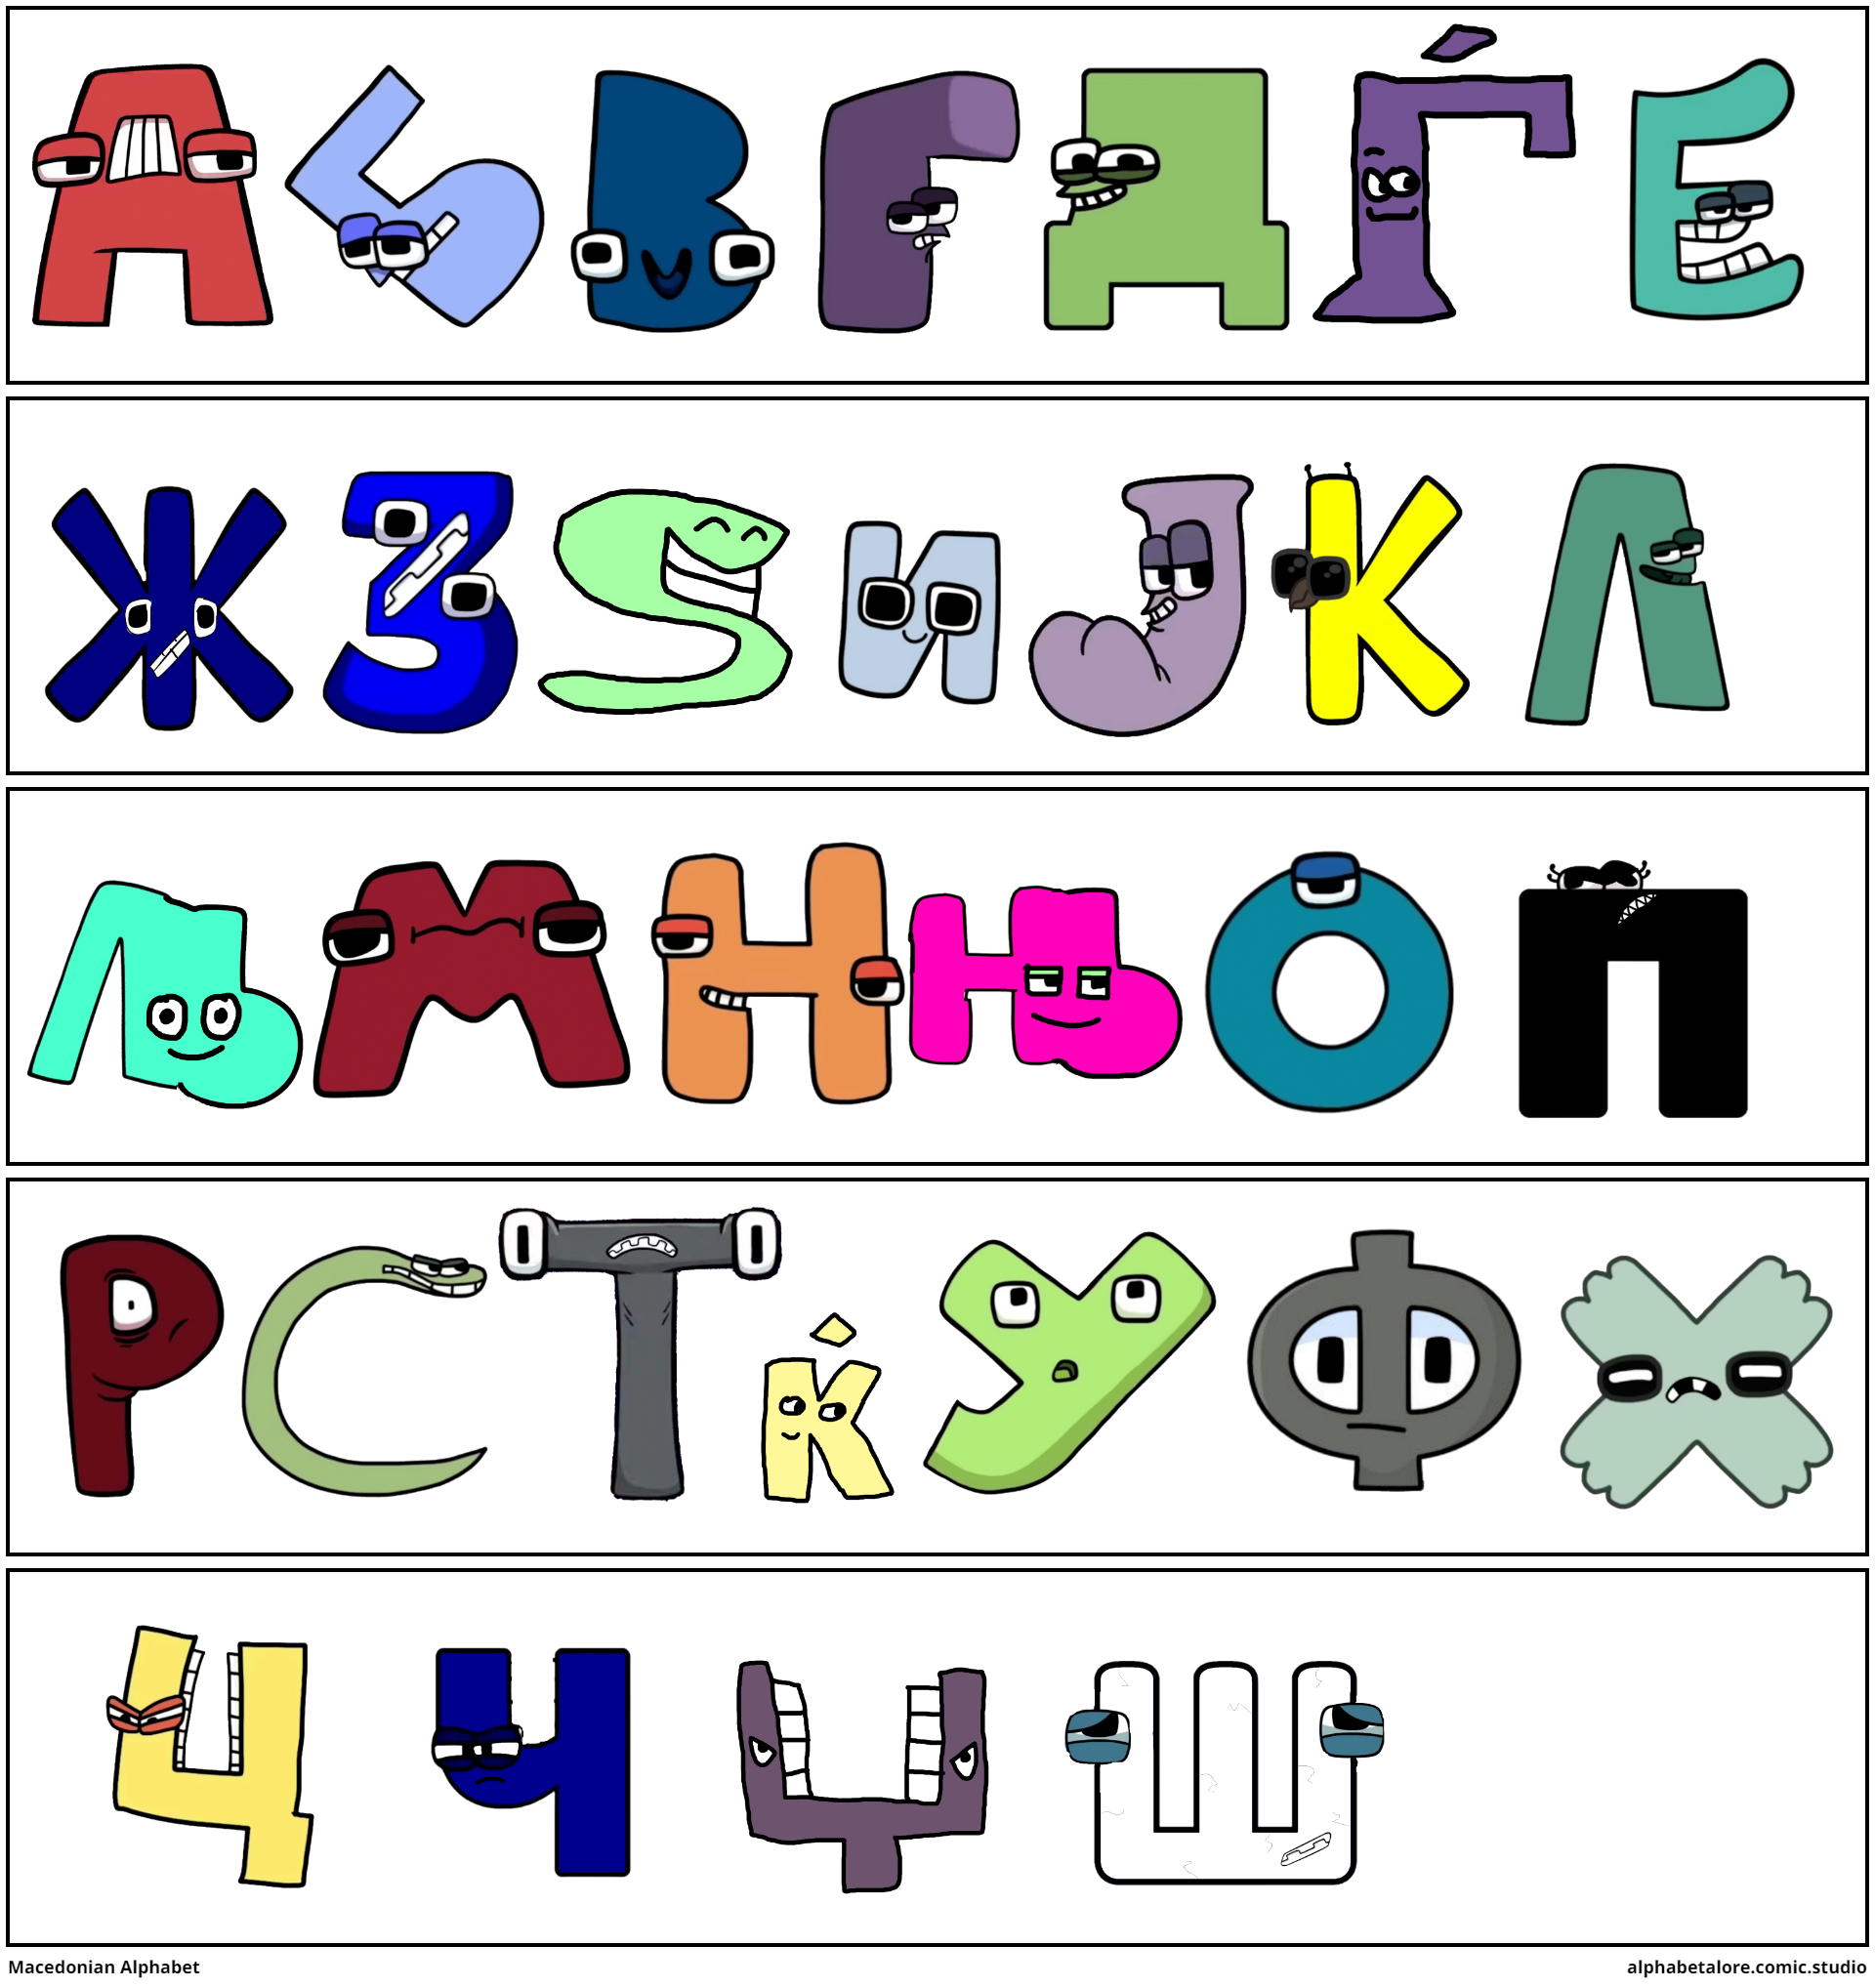 Macedonian Alphabet